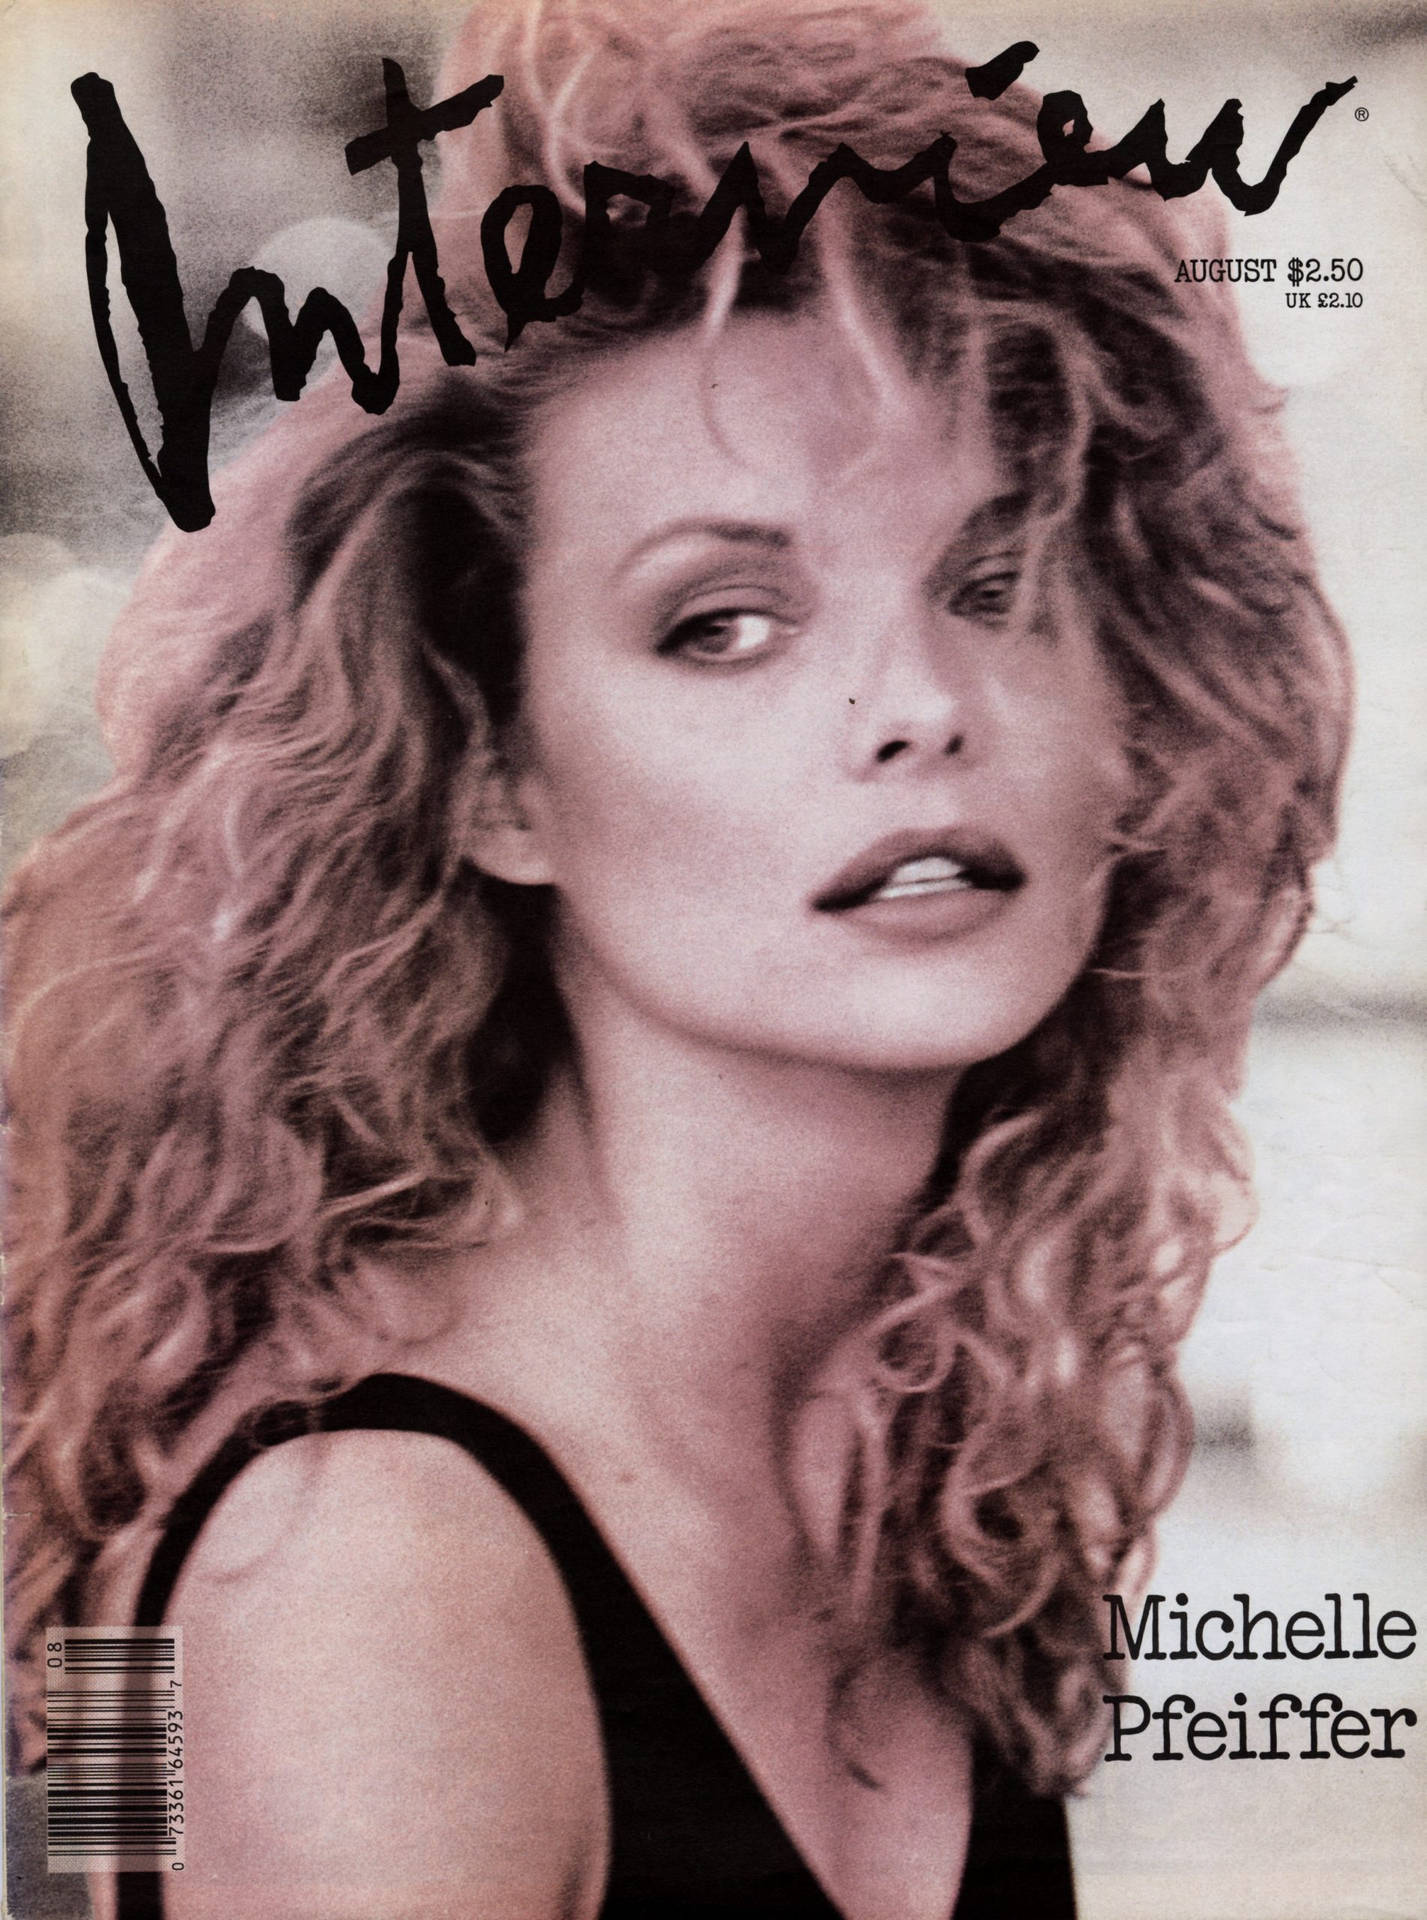 Michelle Pfeiffer Interview Magazine Cover Wallpaper